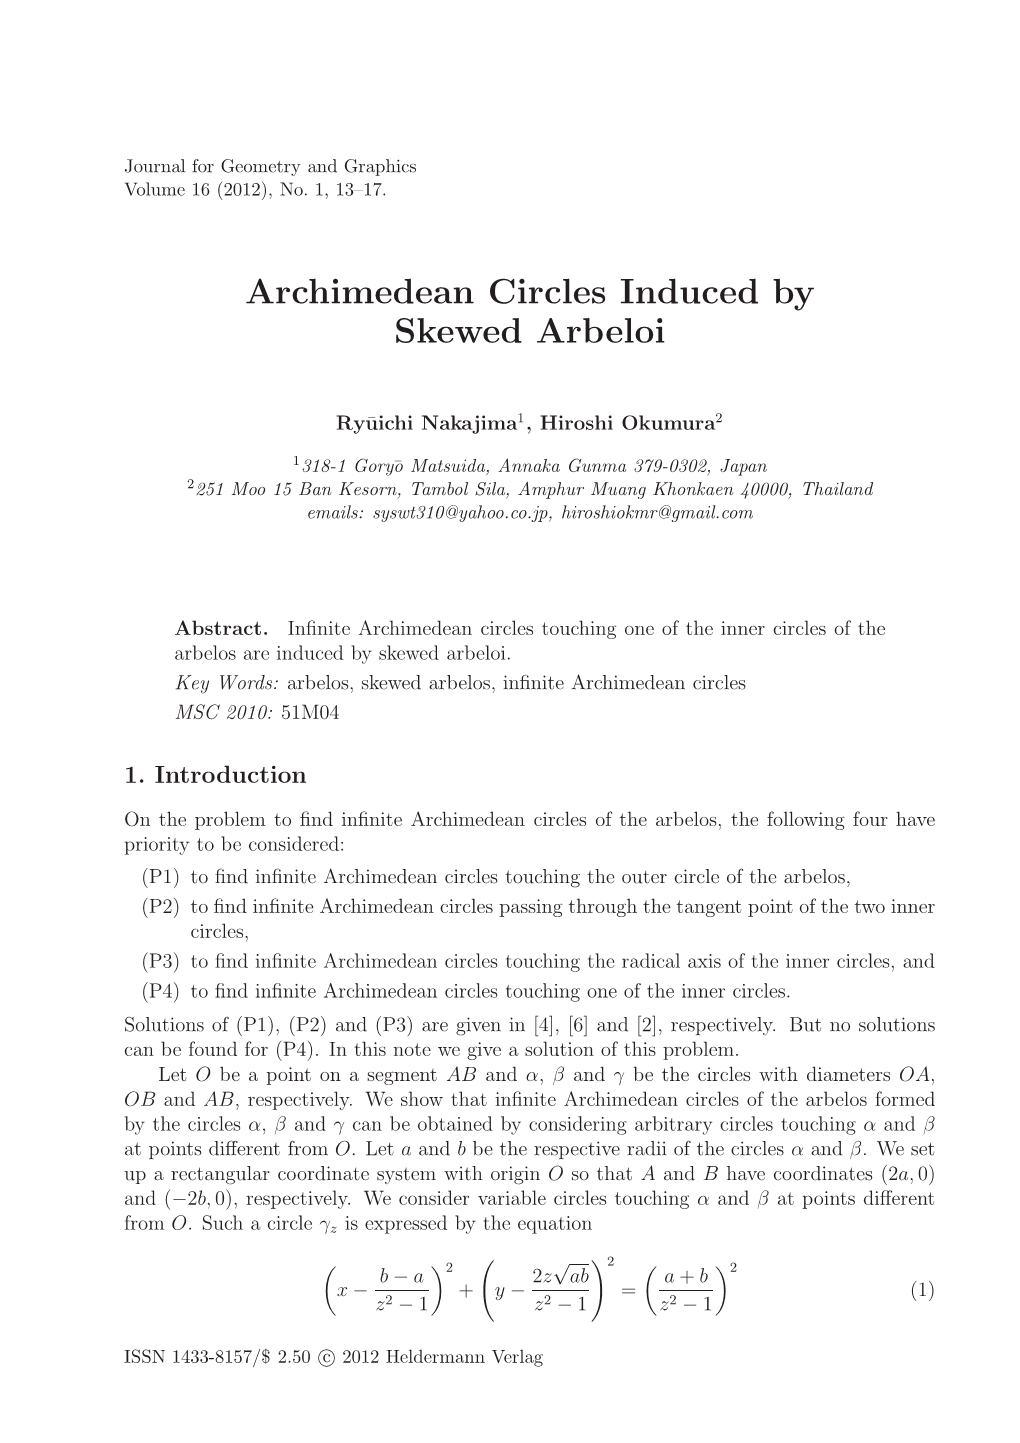 Archimedean Circles Induced by Skewed Arbeloi